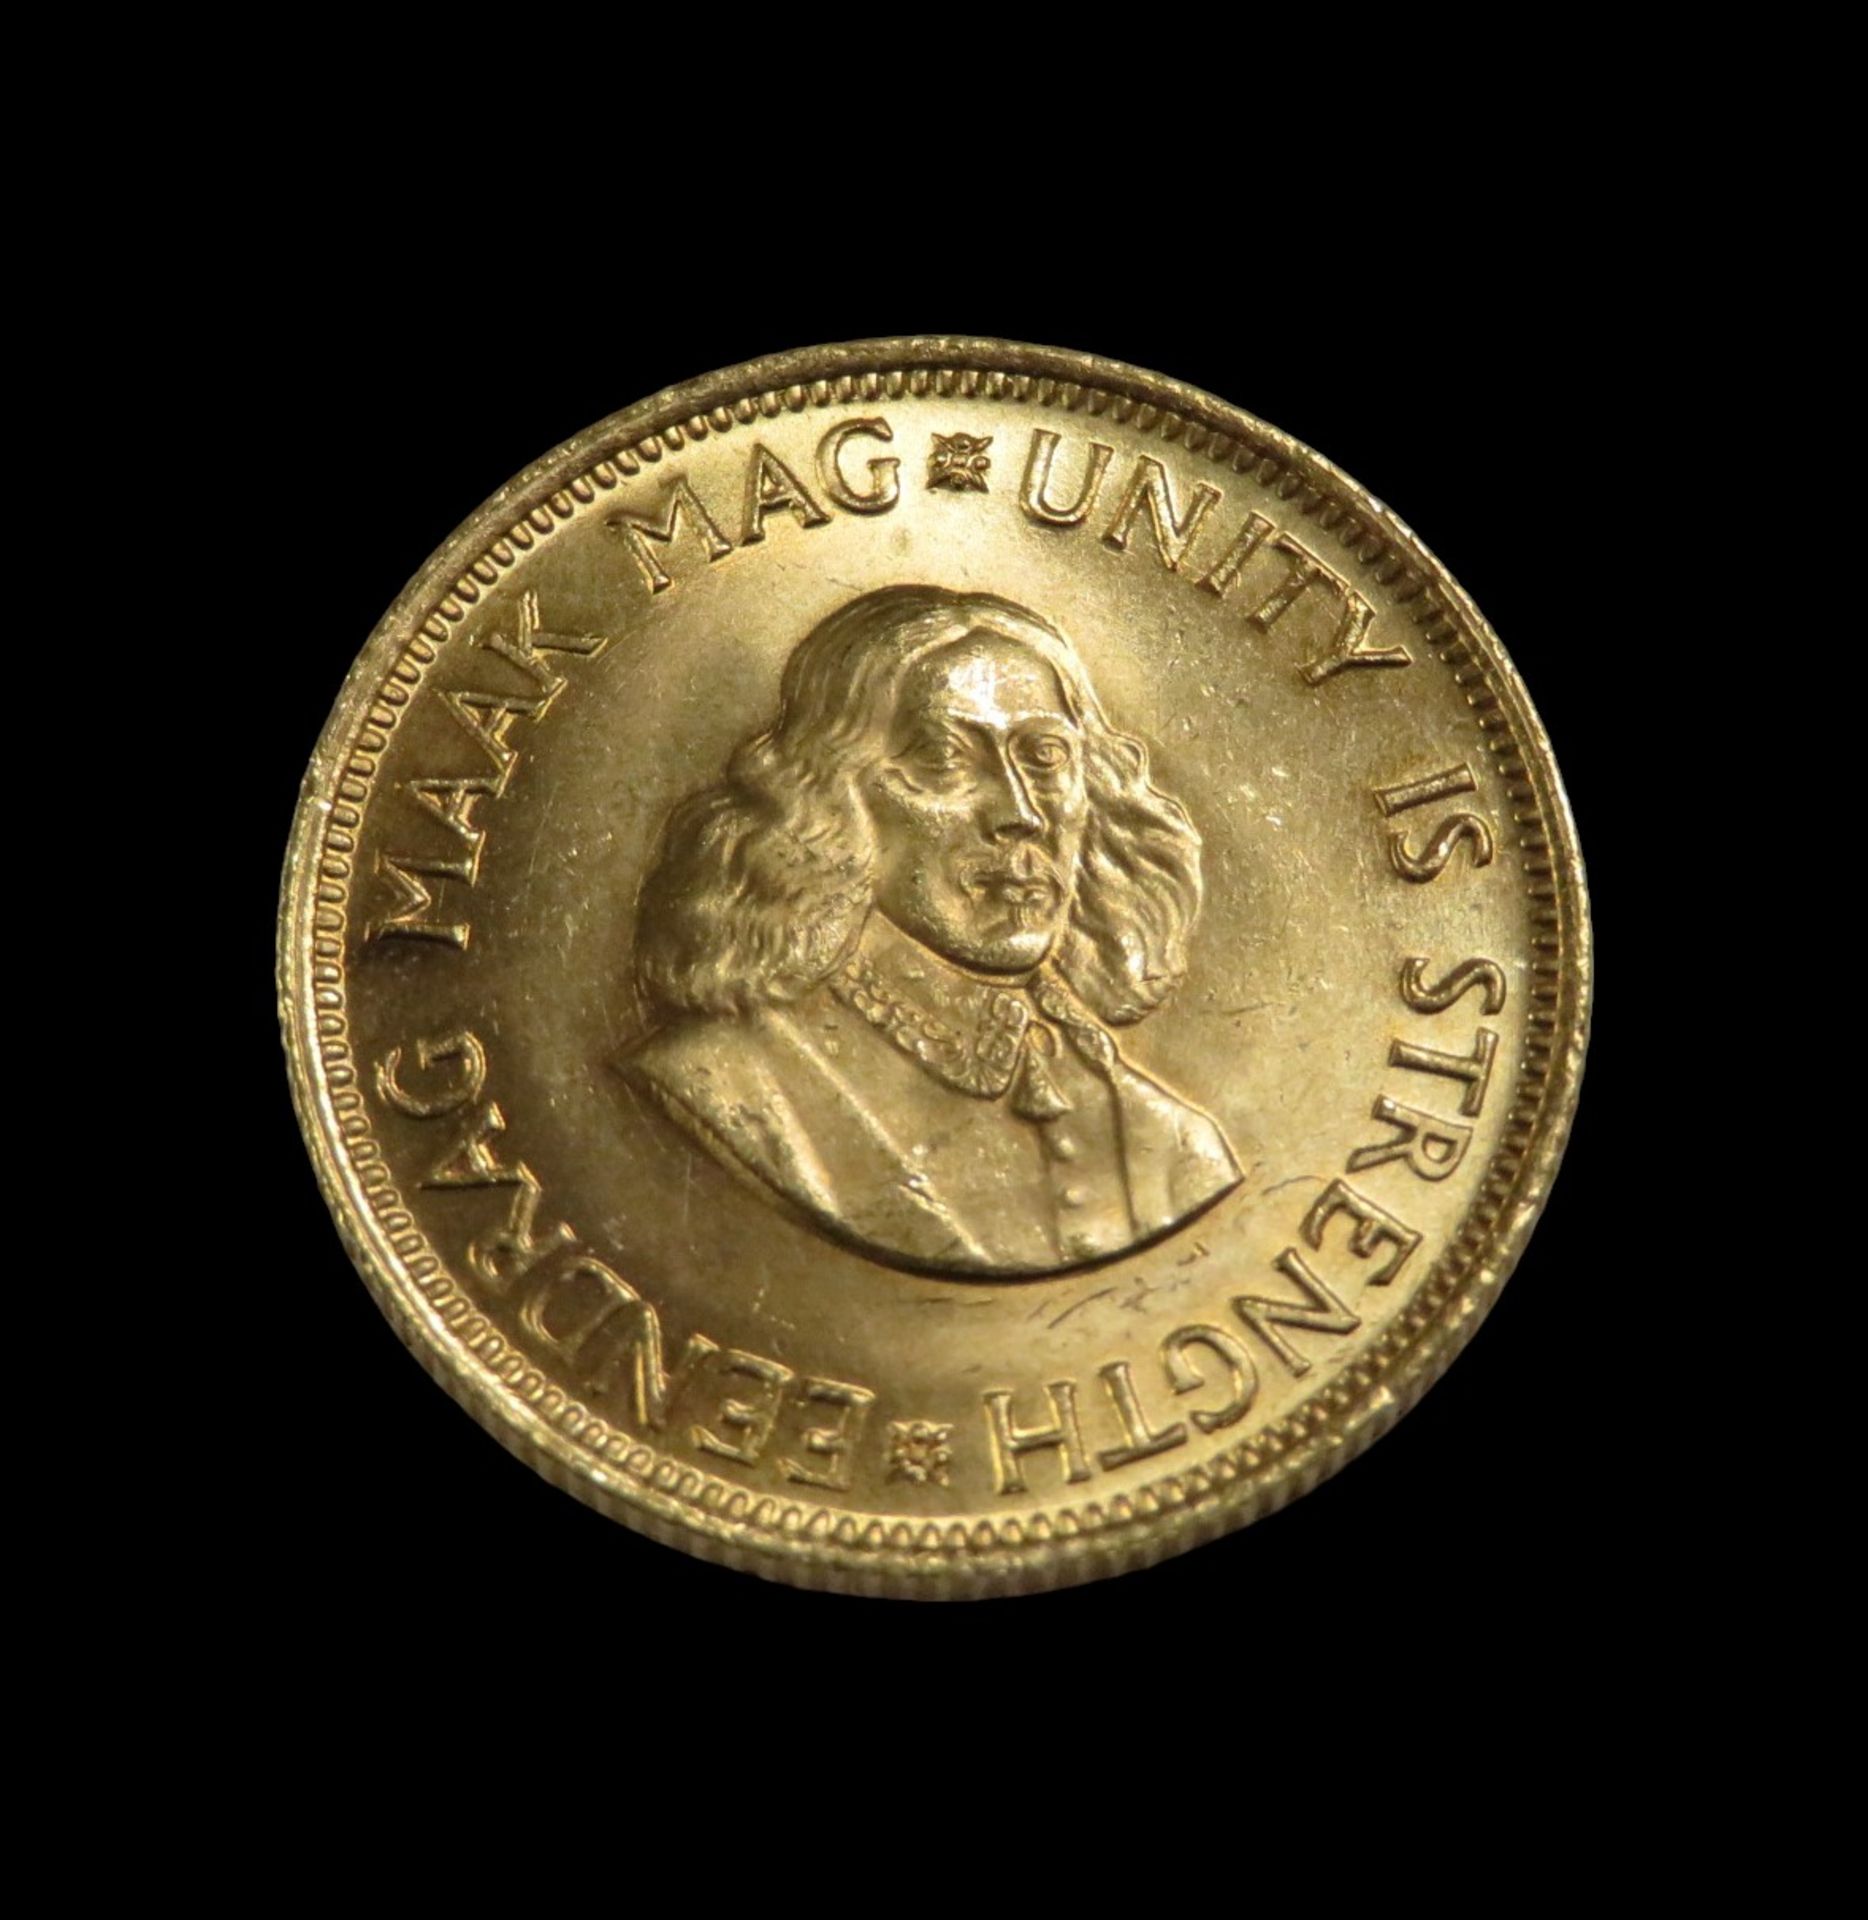 Goldmünze, 2 Rand, Südafrika, 1962, 916,7/000, 8 g, d 2,2 cm. - Bild 2 aus 2